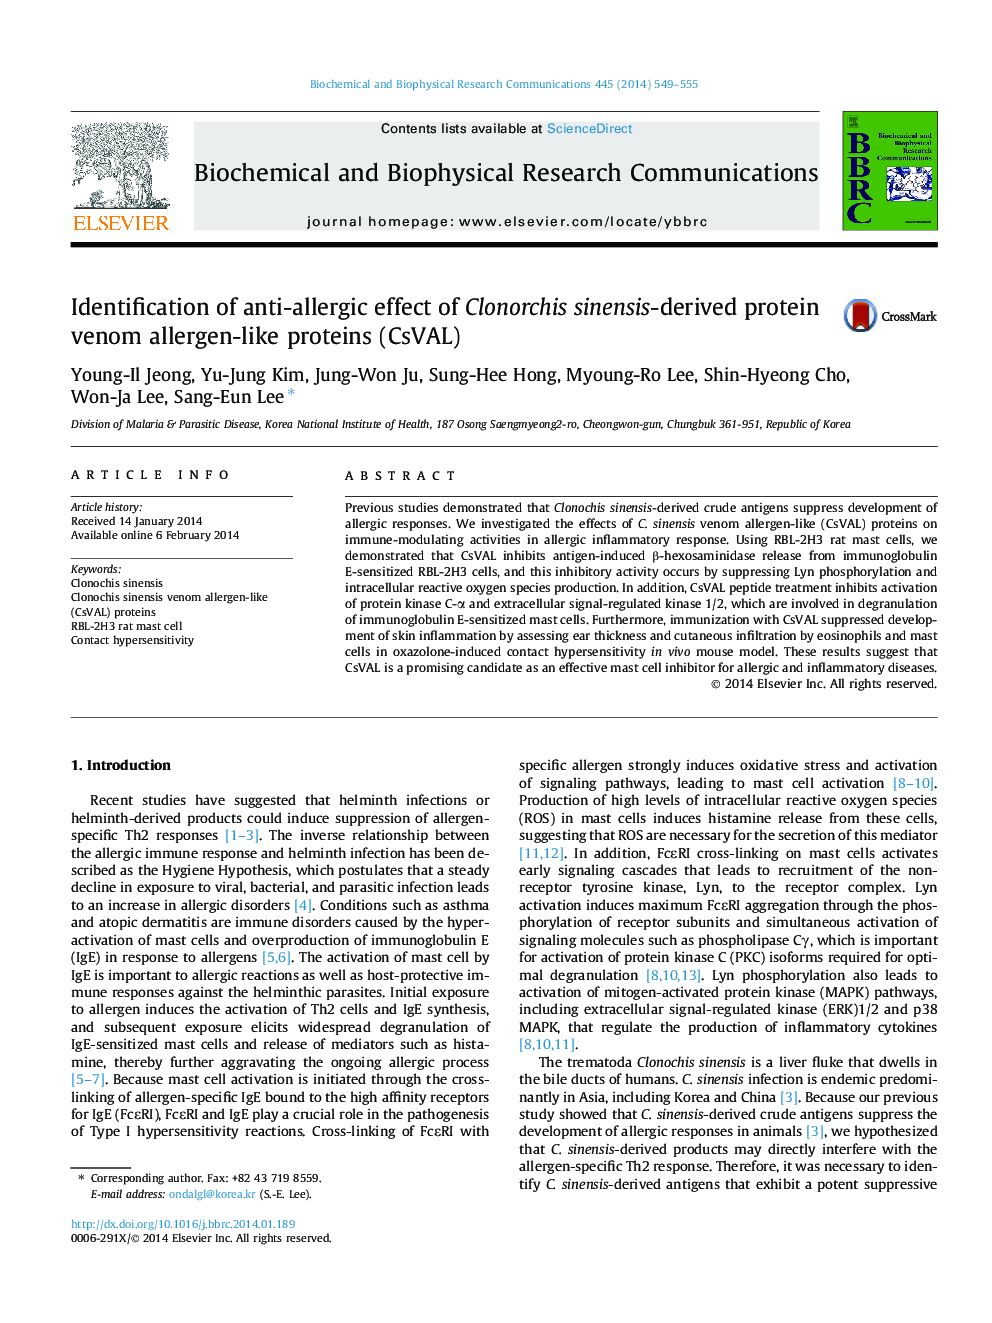 Identification of anti-allergic effect of Clonorchis sinensis-derived protein venom allergen-like proteins (CsVAL)